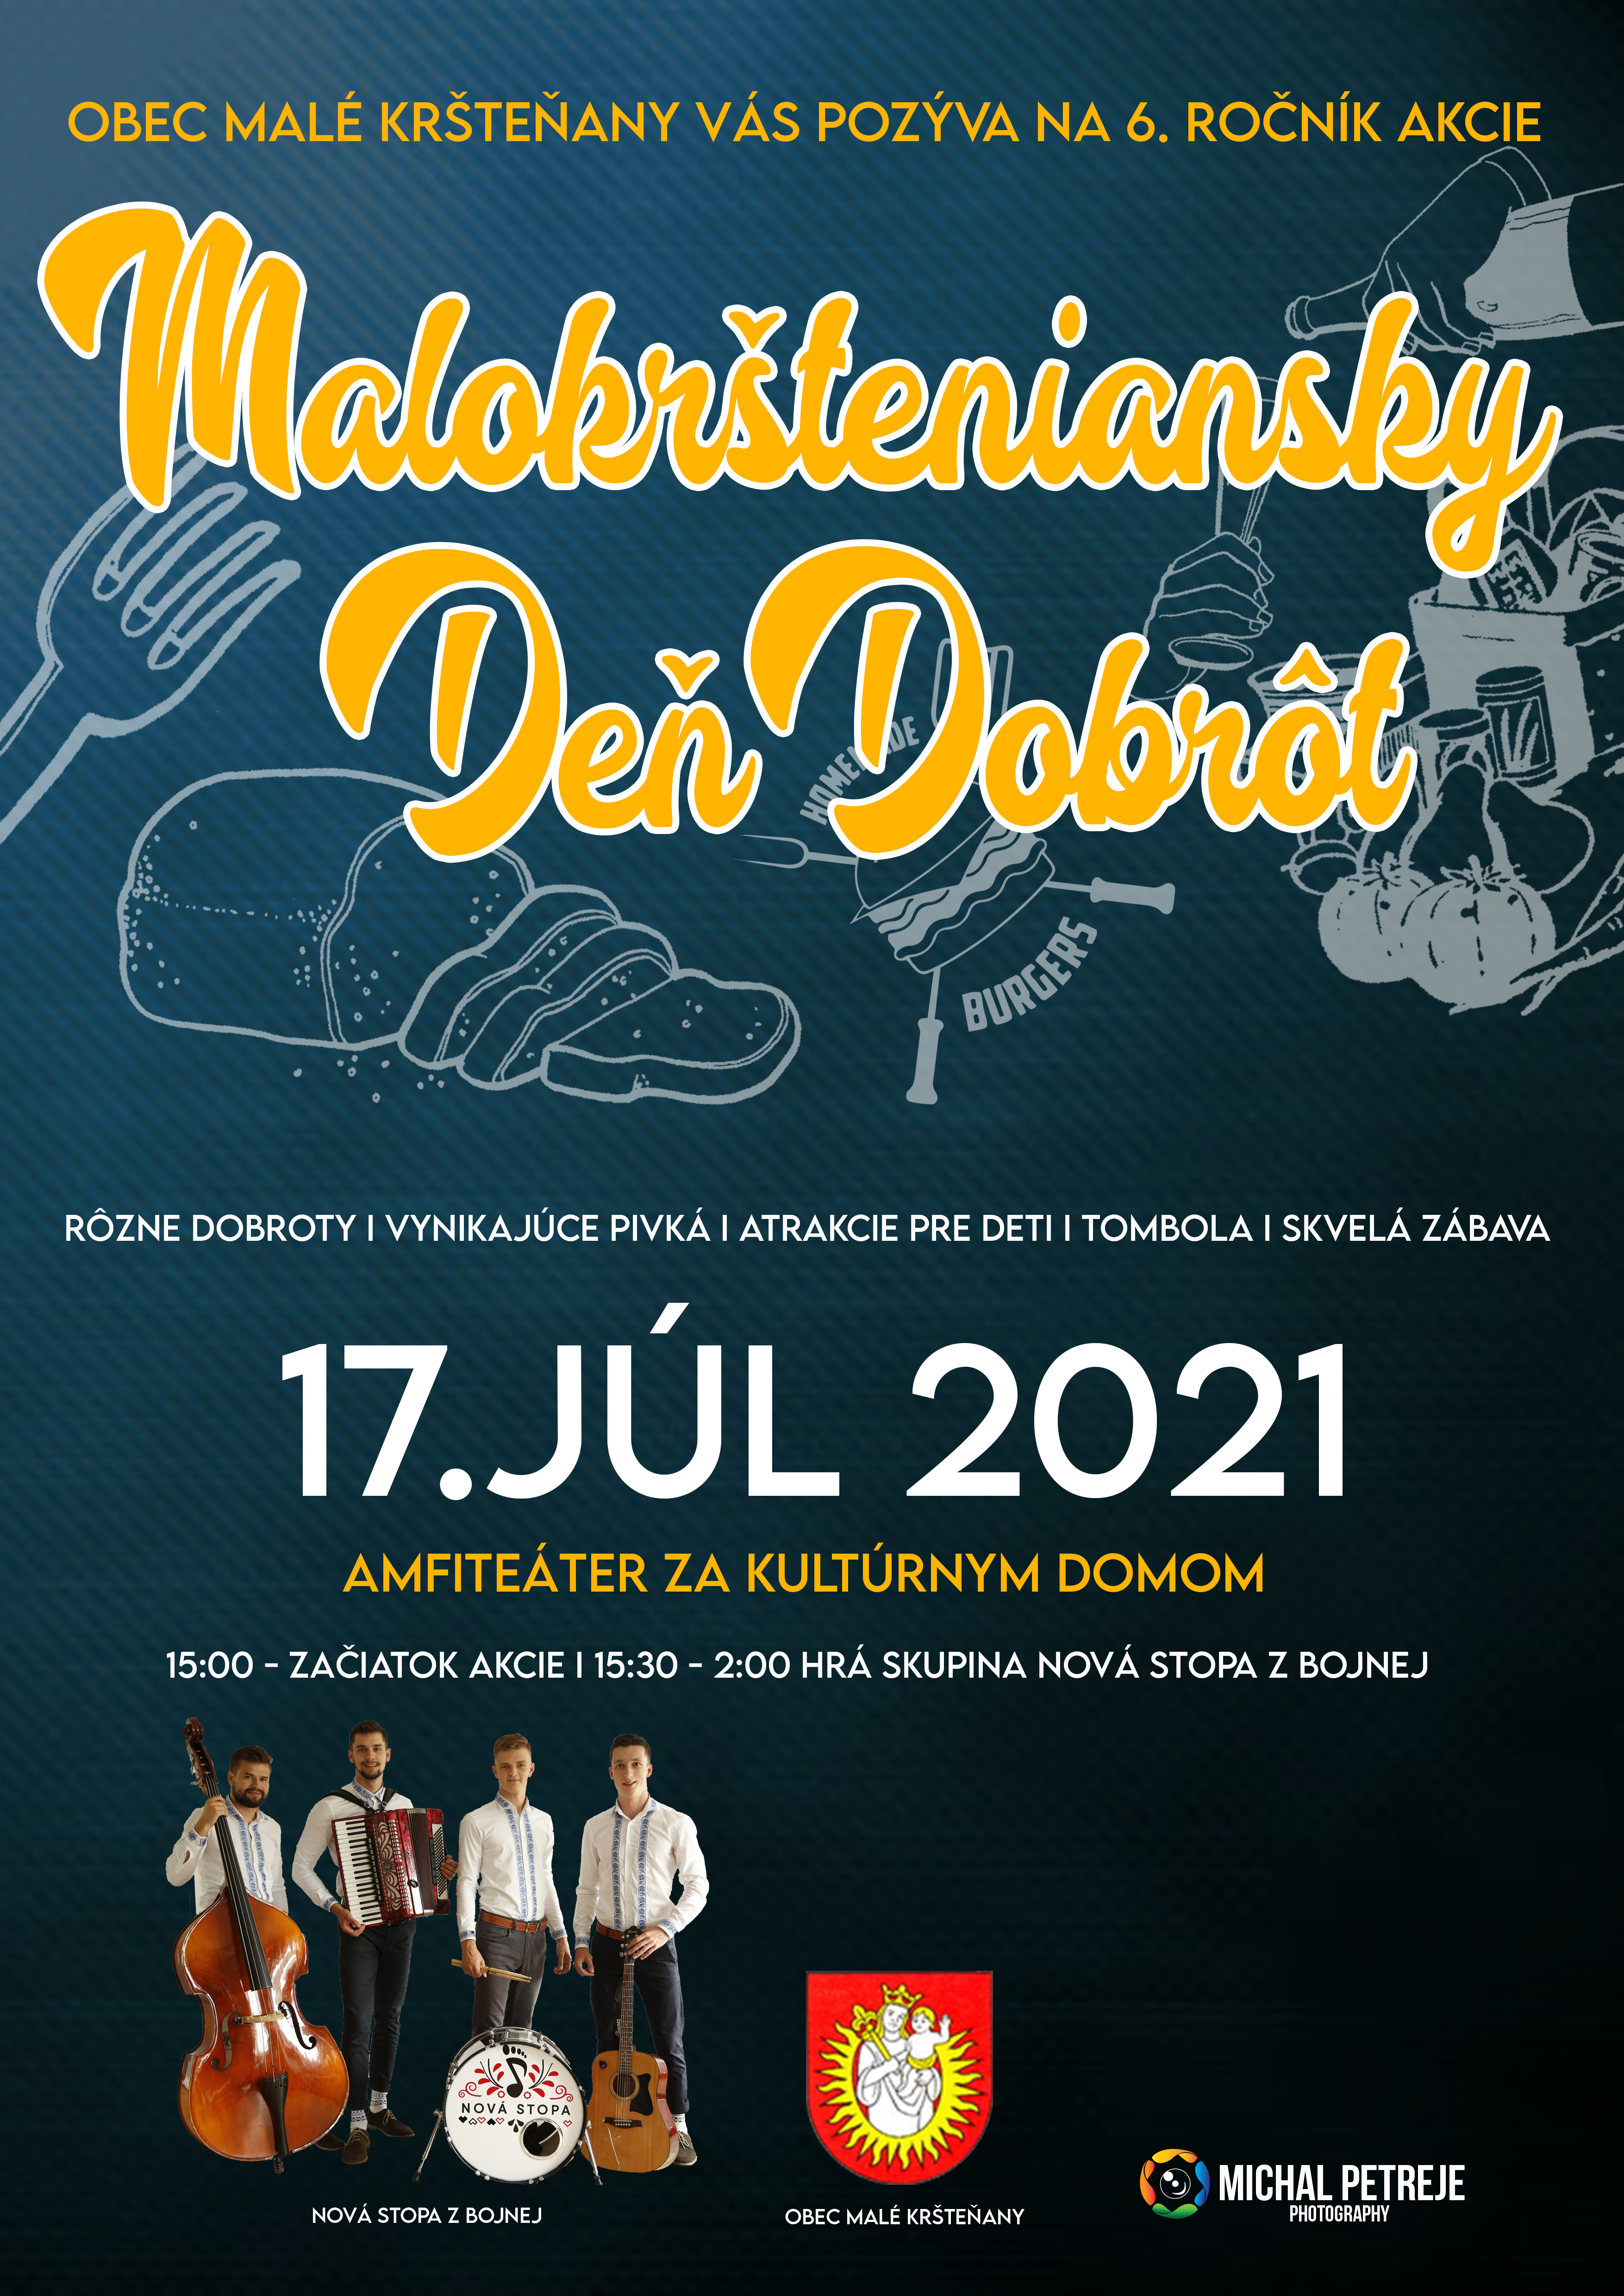 NOV - - - Malokrteniansky de dobrt  2021 Mal Krteany - VI. ronk